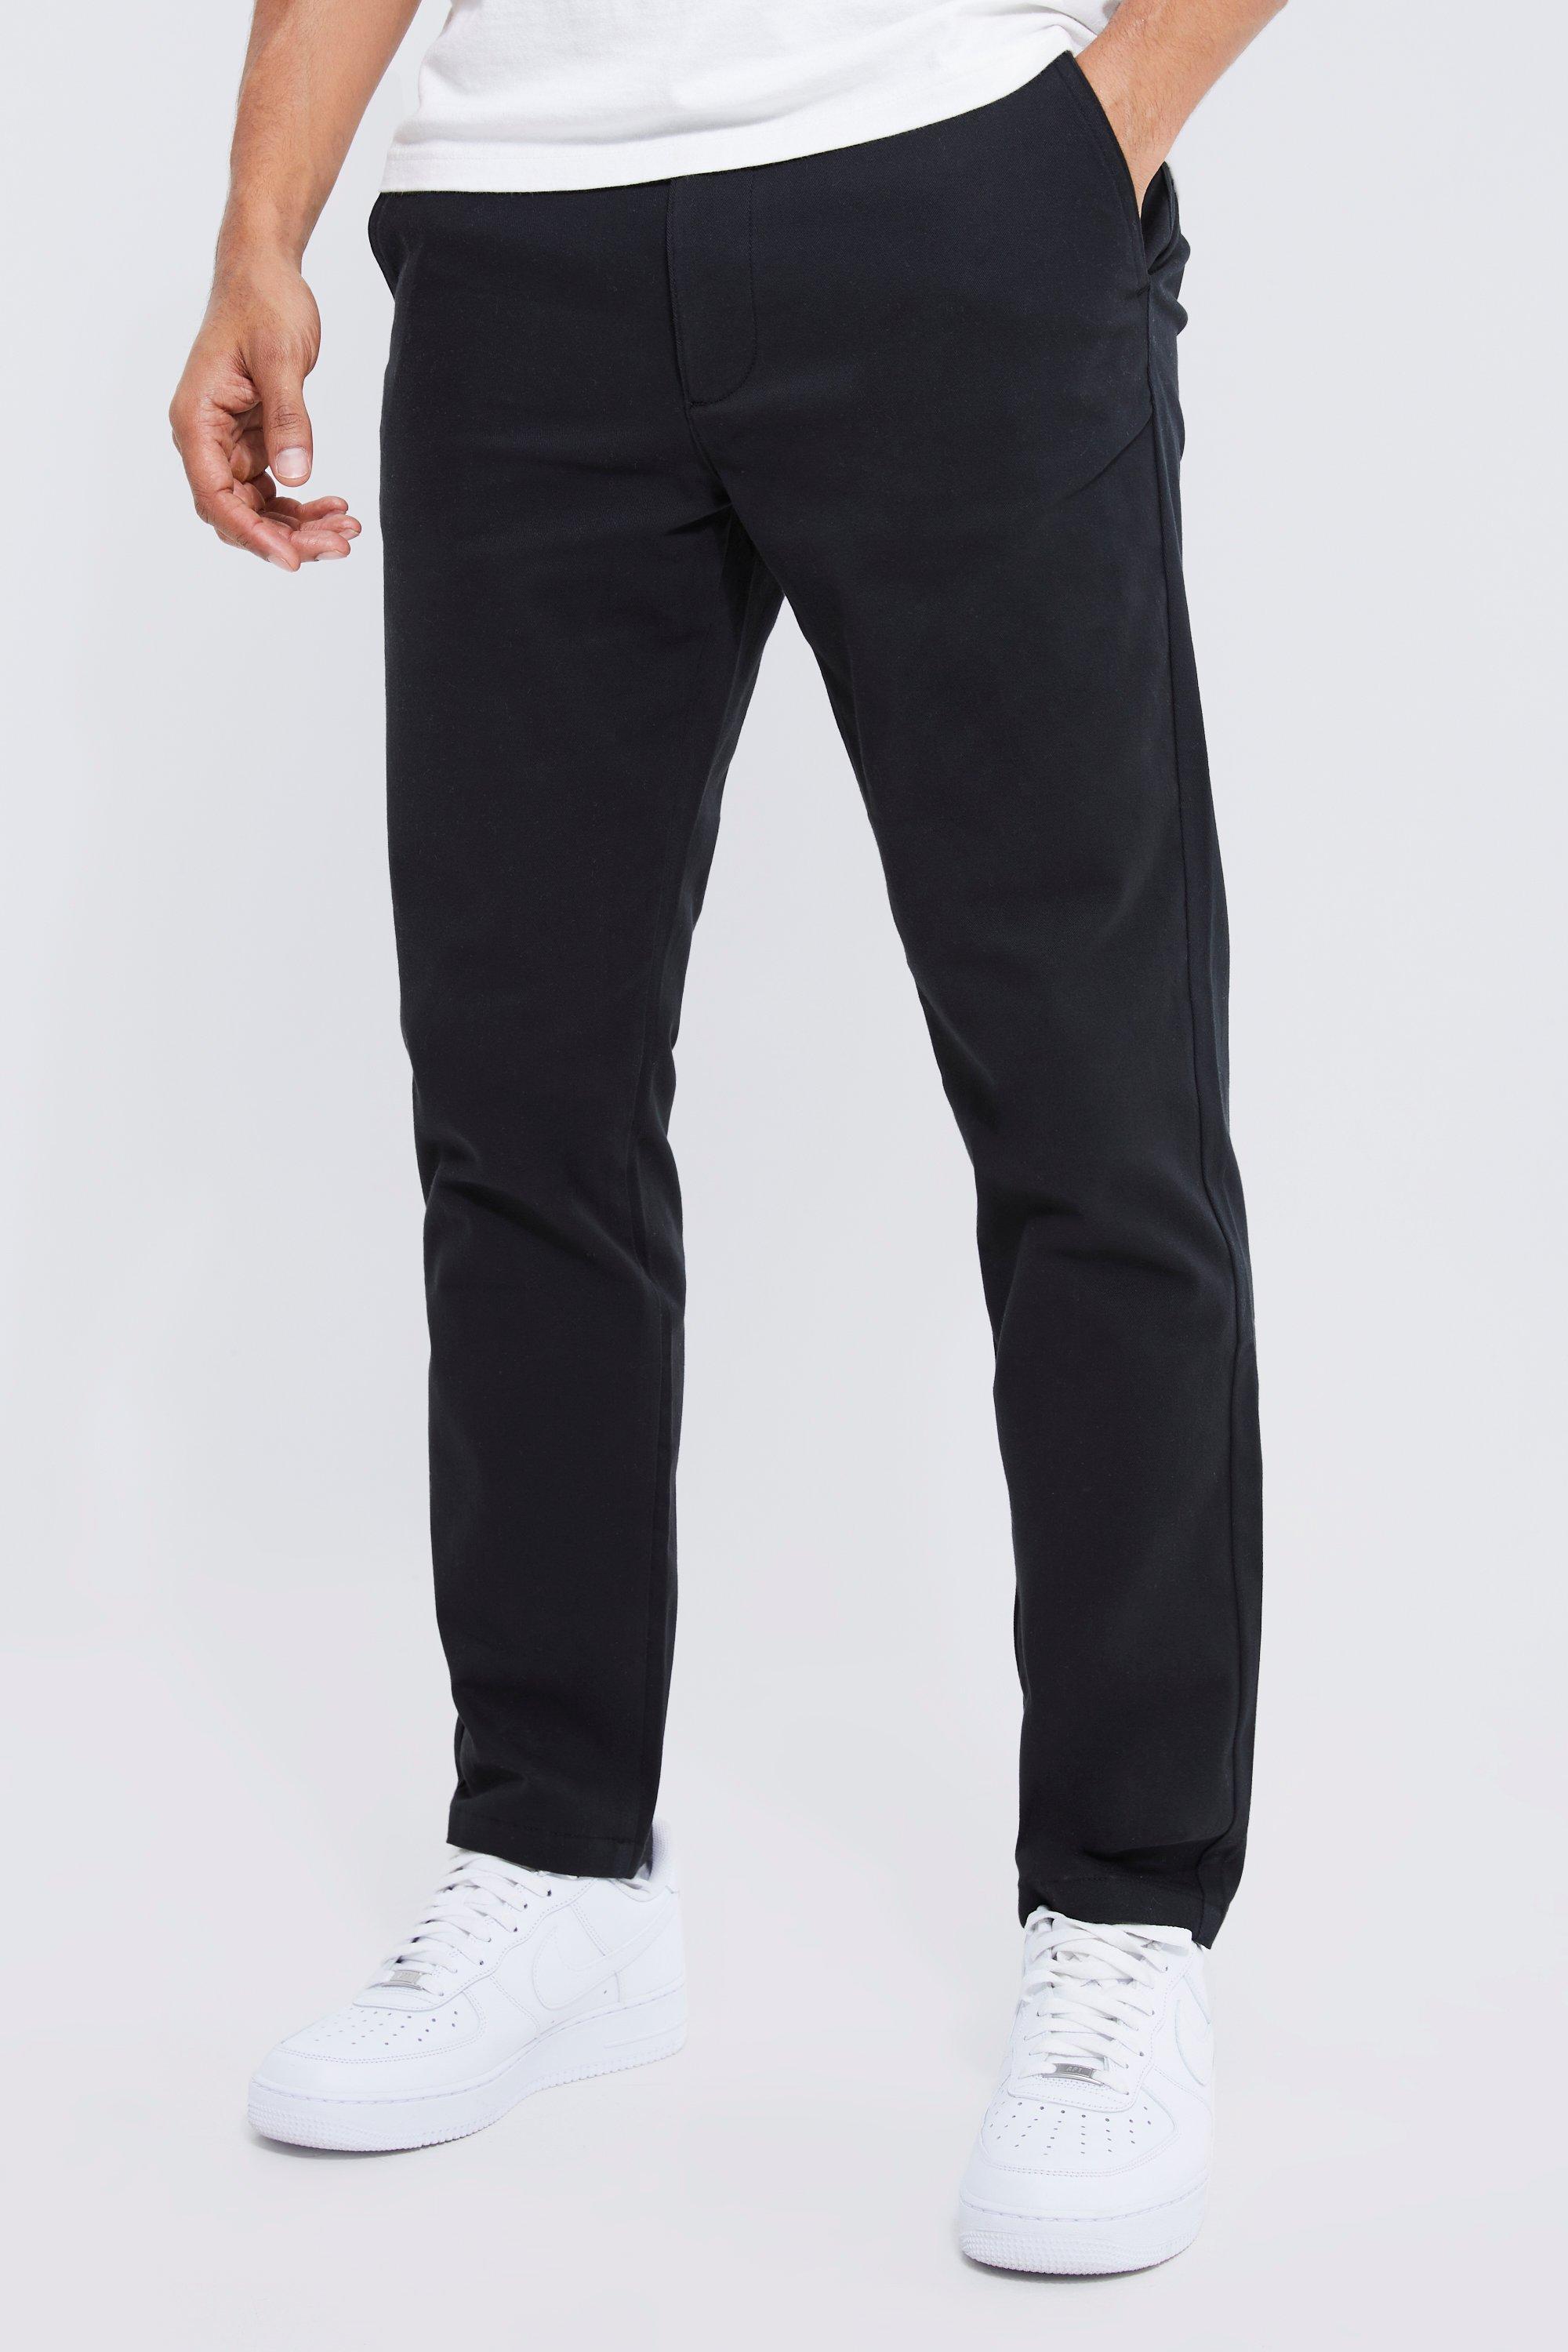 pantalon chino slim homme - noir - 28, noir